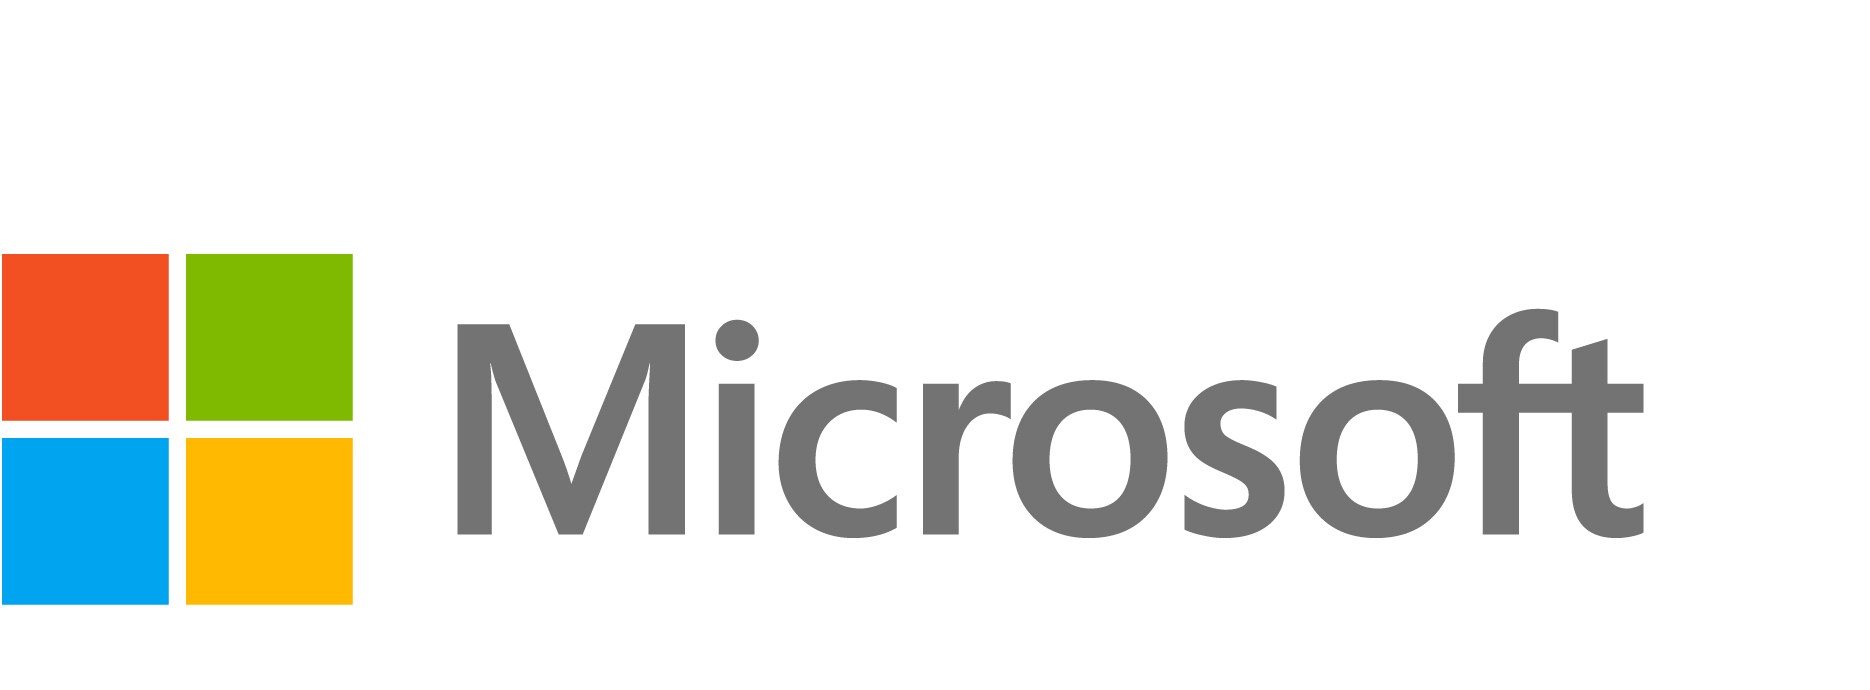 Windows 10/11 Enterprise A3 - subscription license (1 year) - 1 license